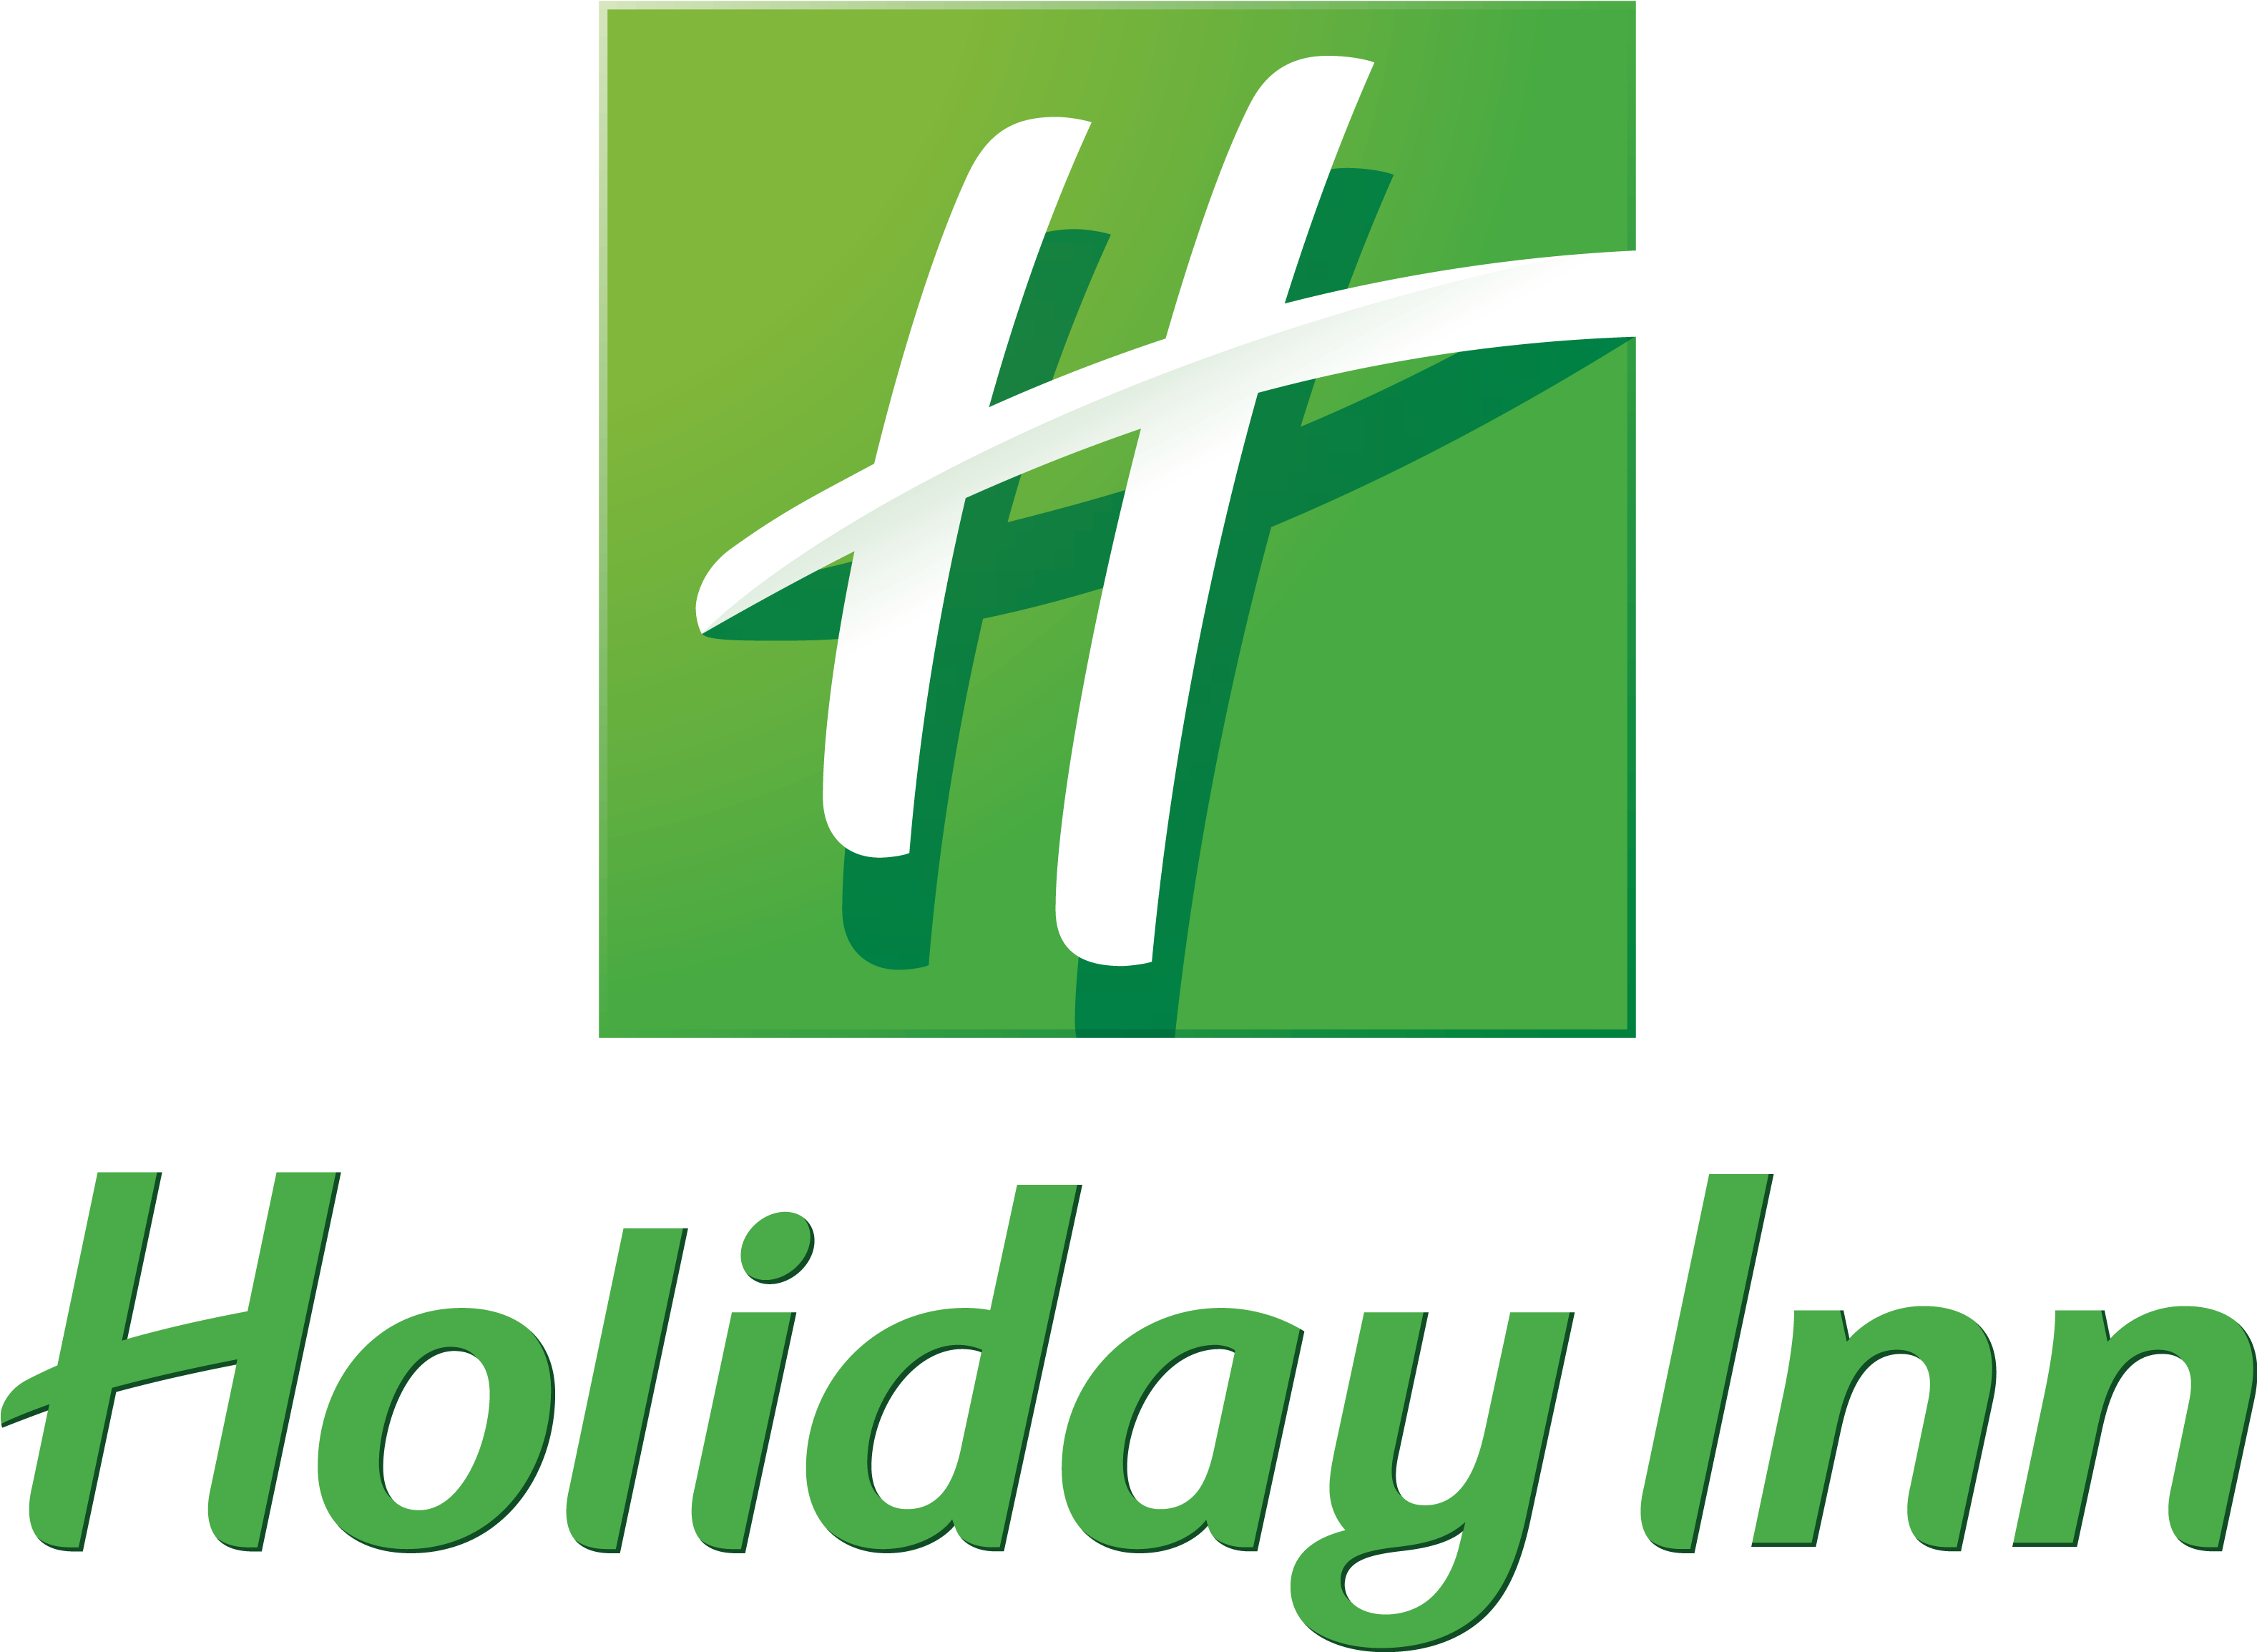 Holiday Inn 2007 - Holiday Inn Logo Jpg (3154x2500), Png Download